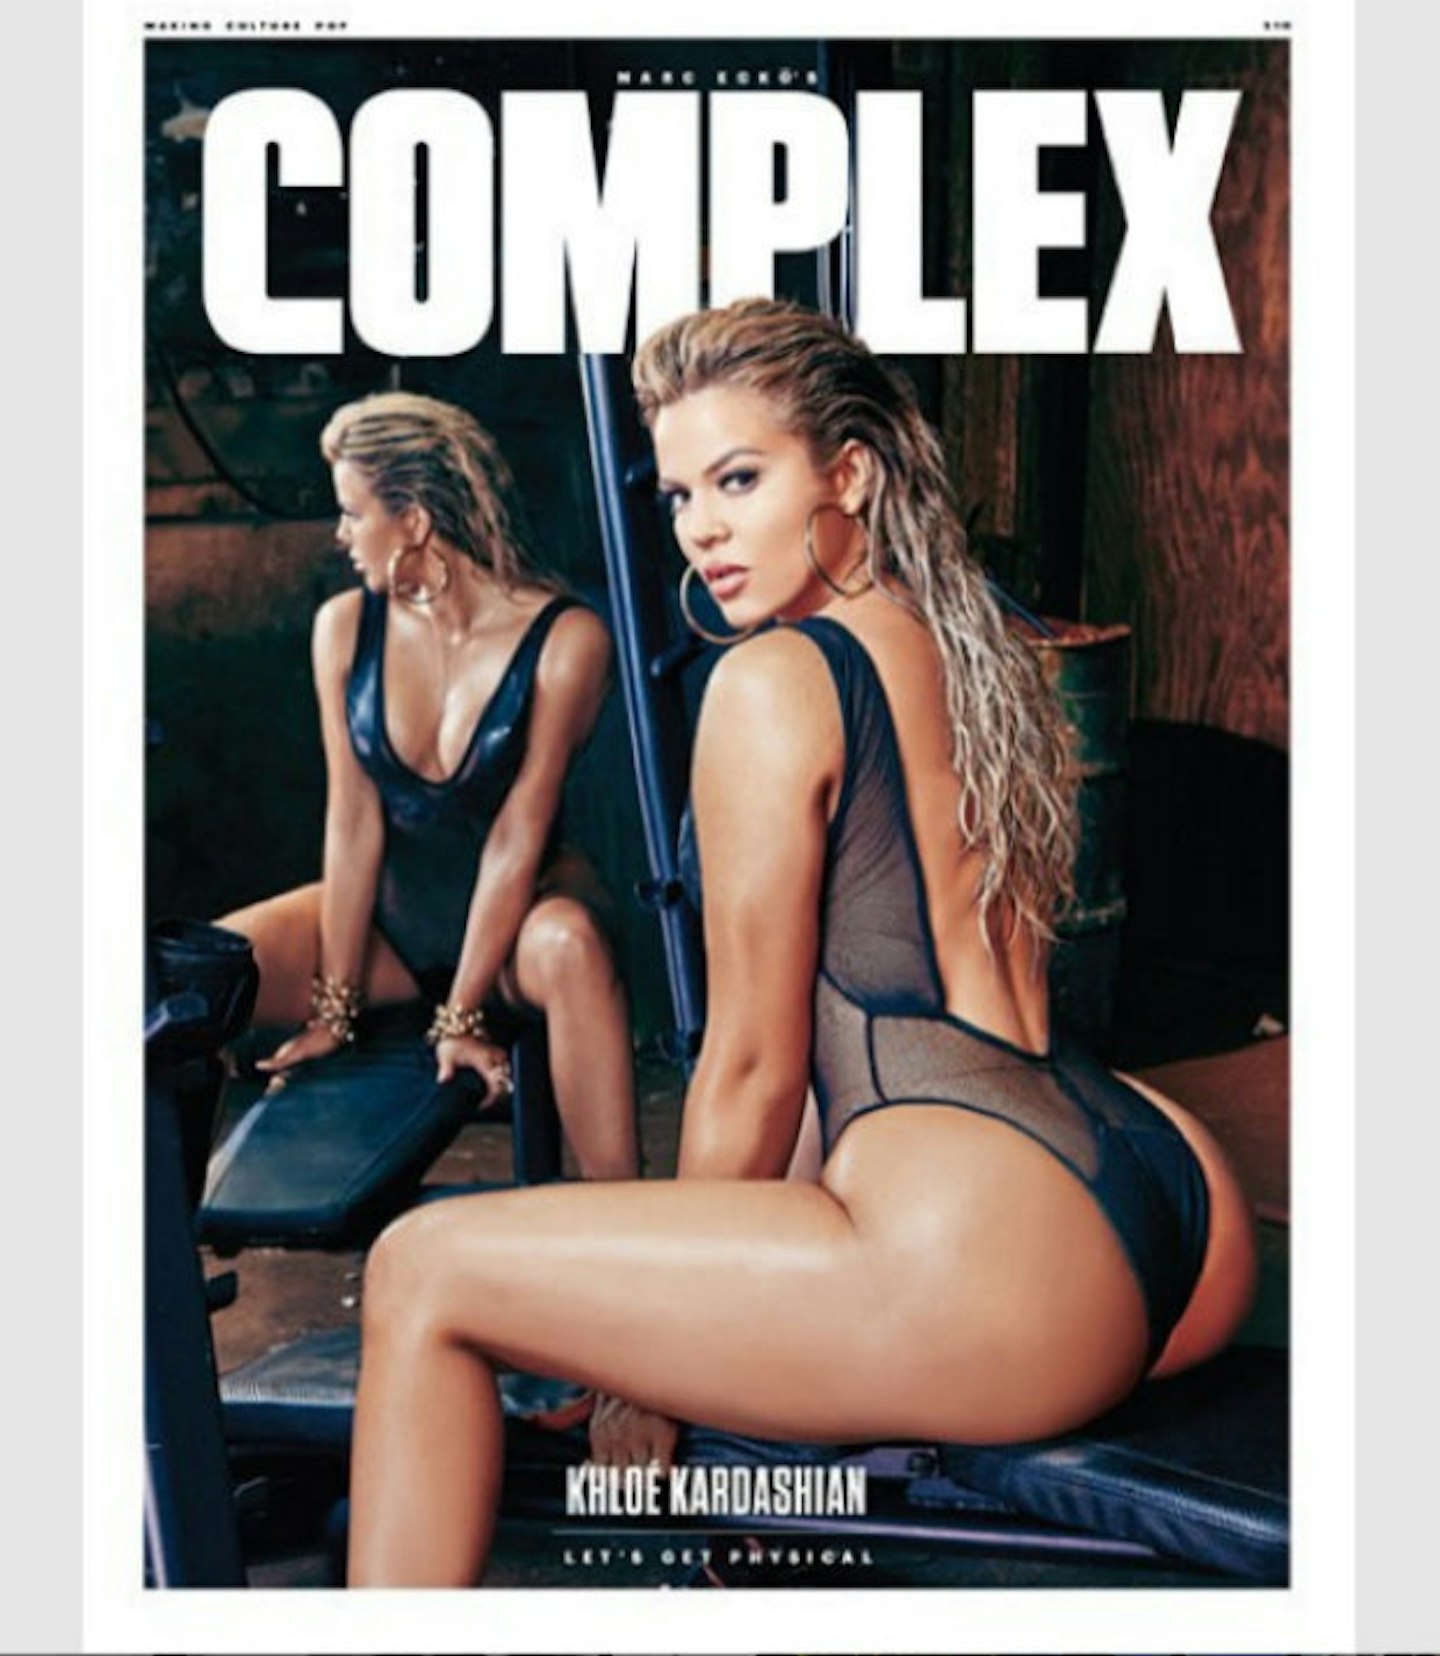 Khloe Kardashian Complex cover